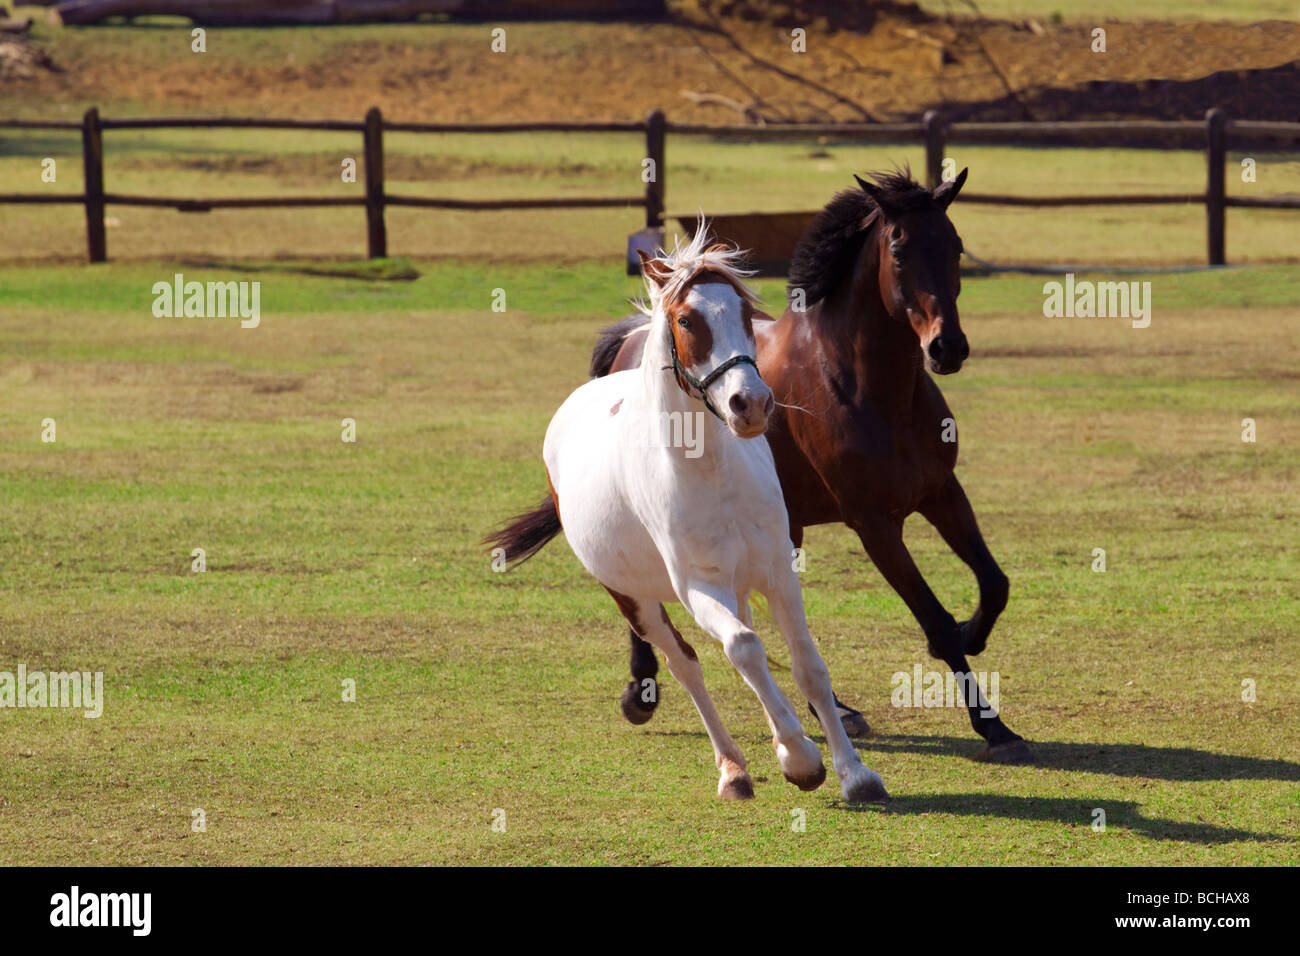 Two horses running Stock Photo